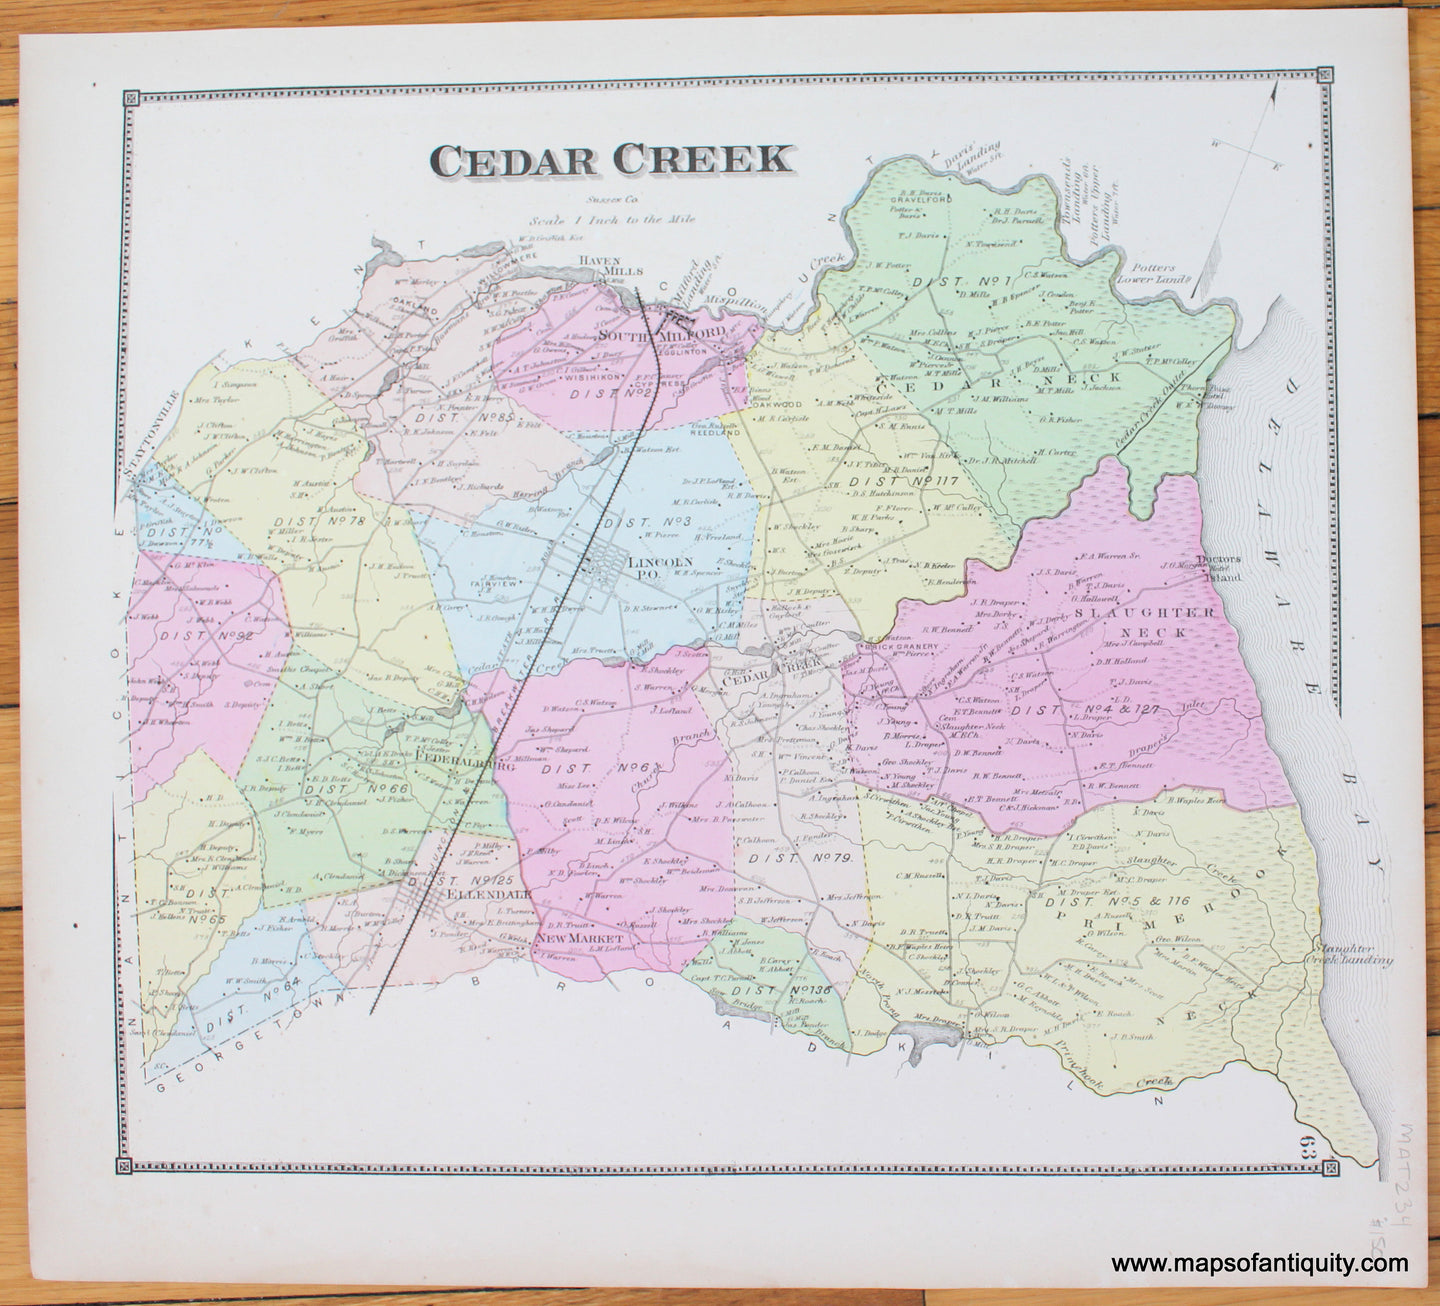 Cedar-Creek-Antique-Map-1868-Beers-1860s-1800s-19th-century-Maps-of-Antiquity